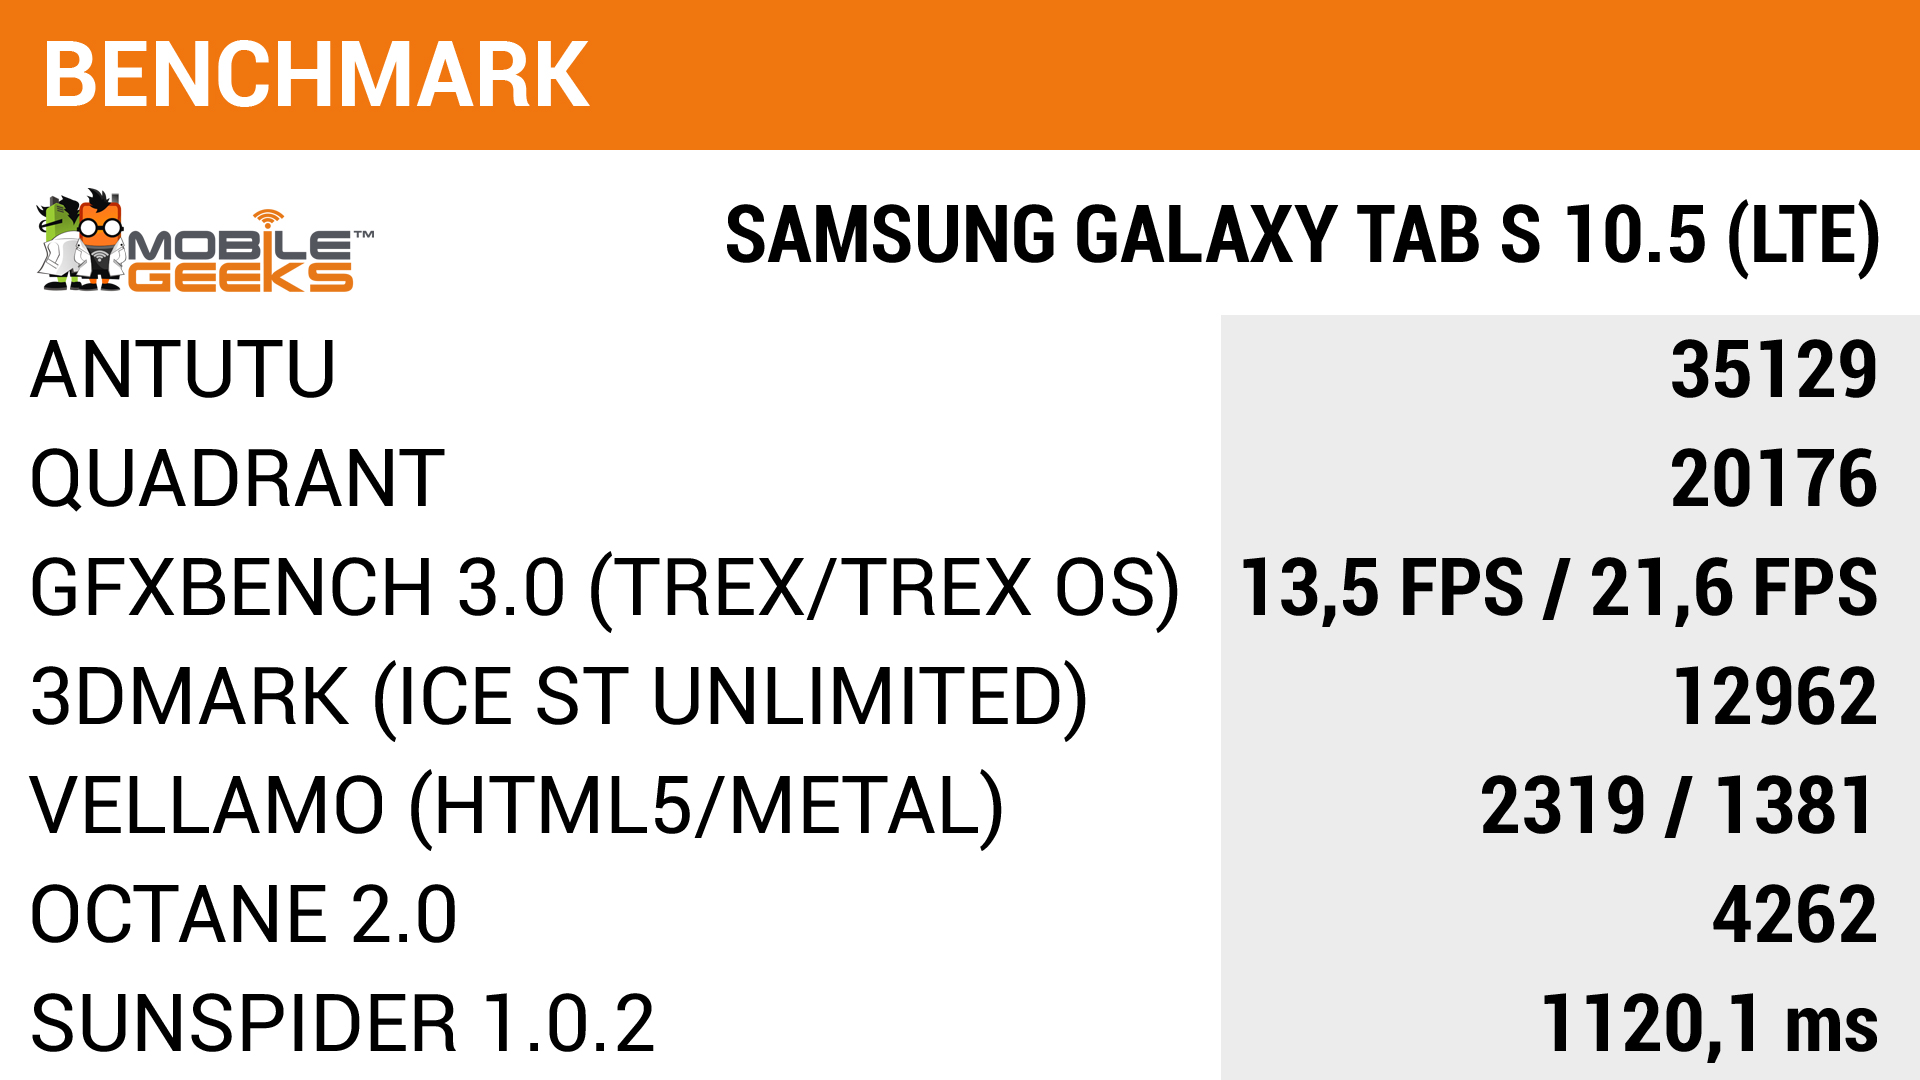 mg_galaxy_tab_s_10.5_benchmark_scorecard